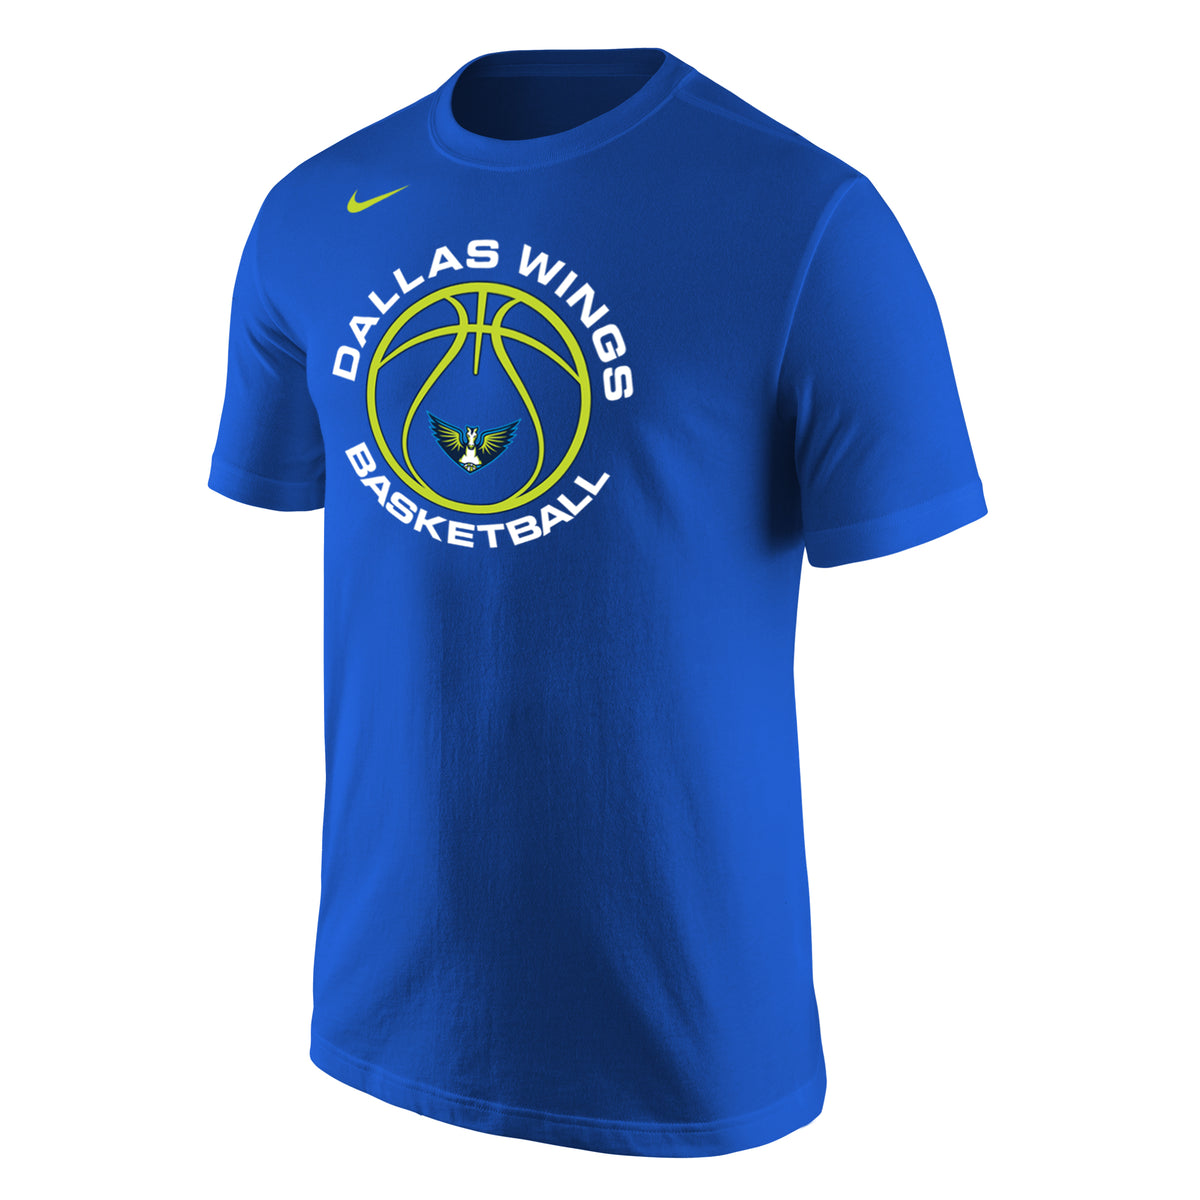 Nike Wings Basketball Line T-Shirt